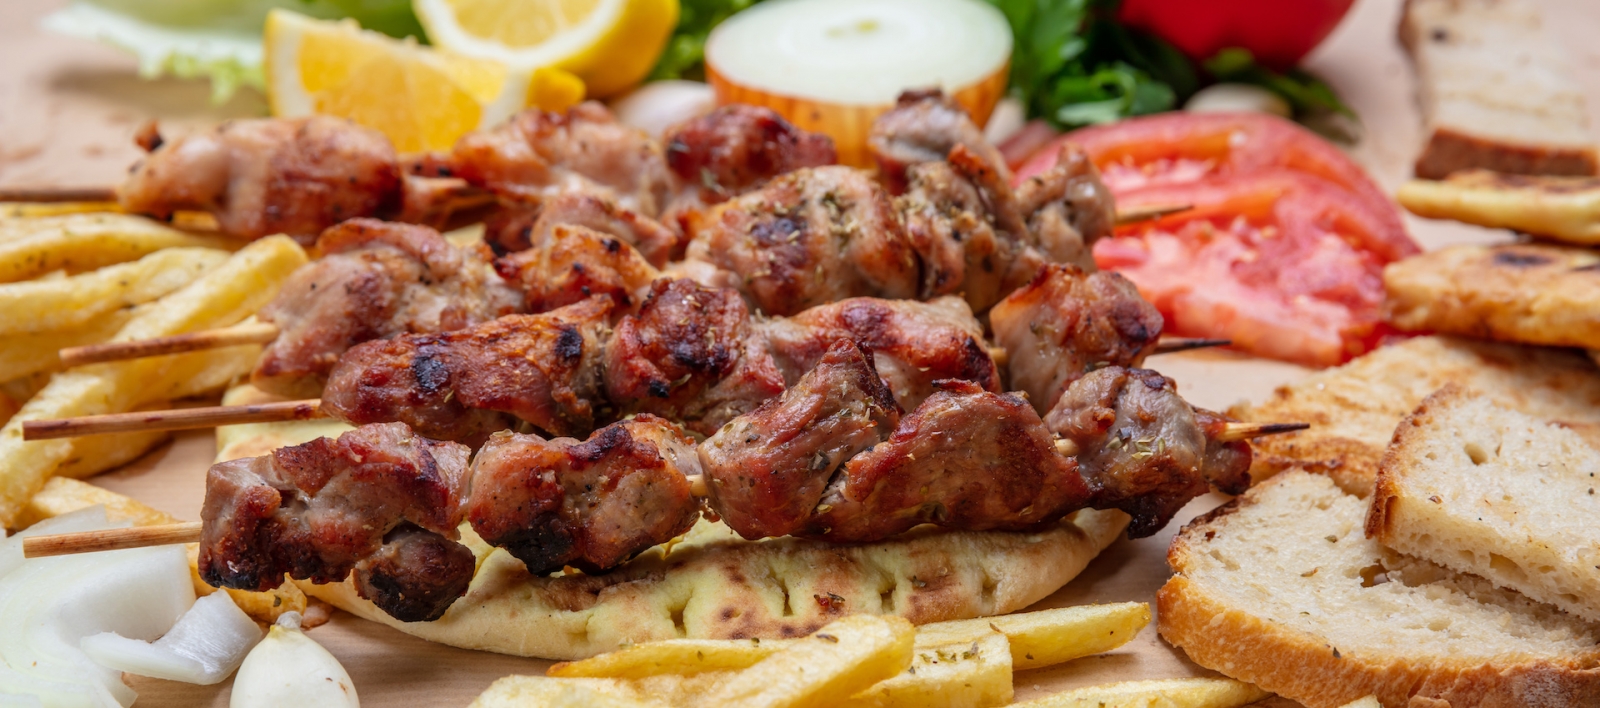 Souvlaki, spiedini di carne, carne tradizionale greca turca su pane pita e patate